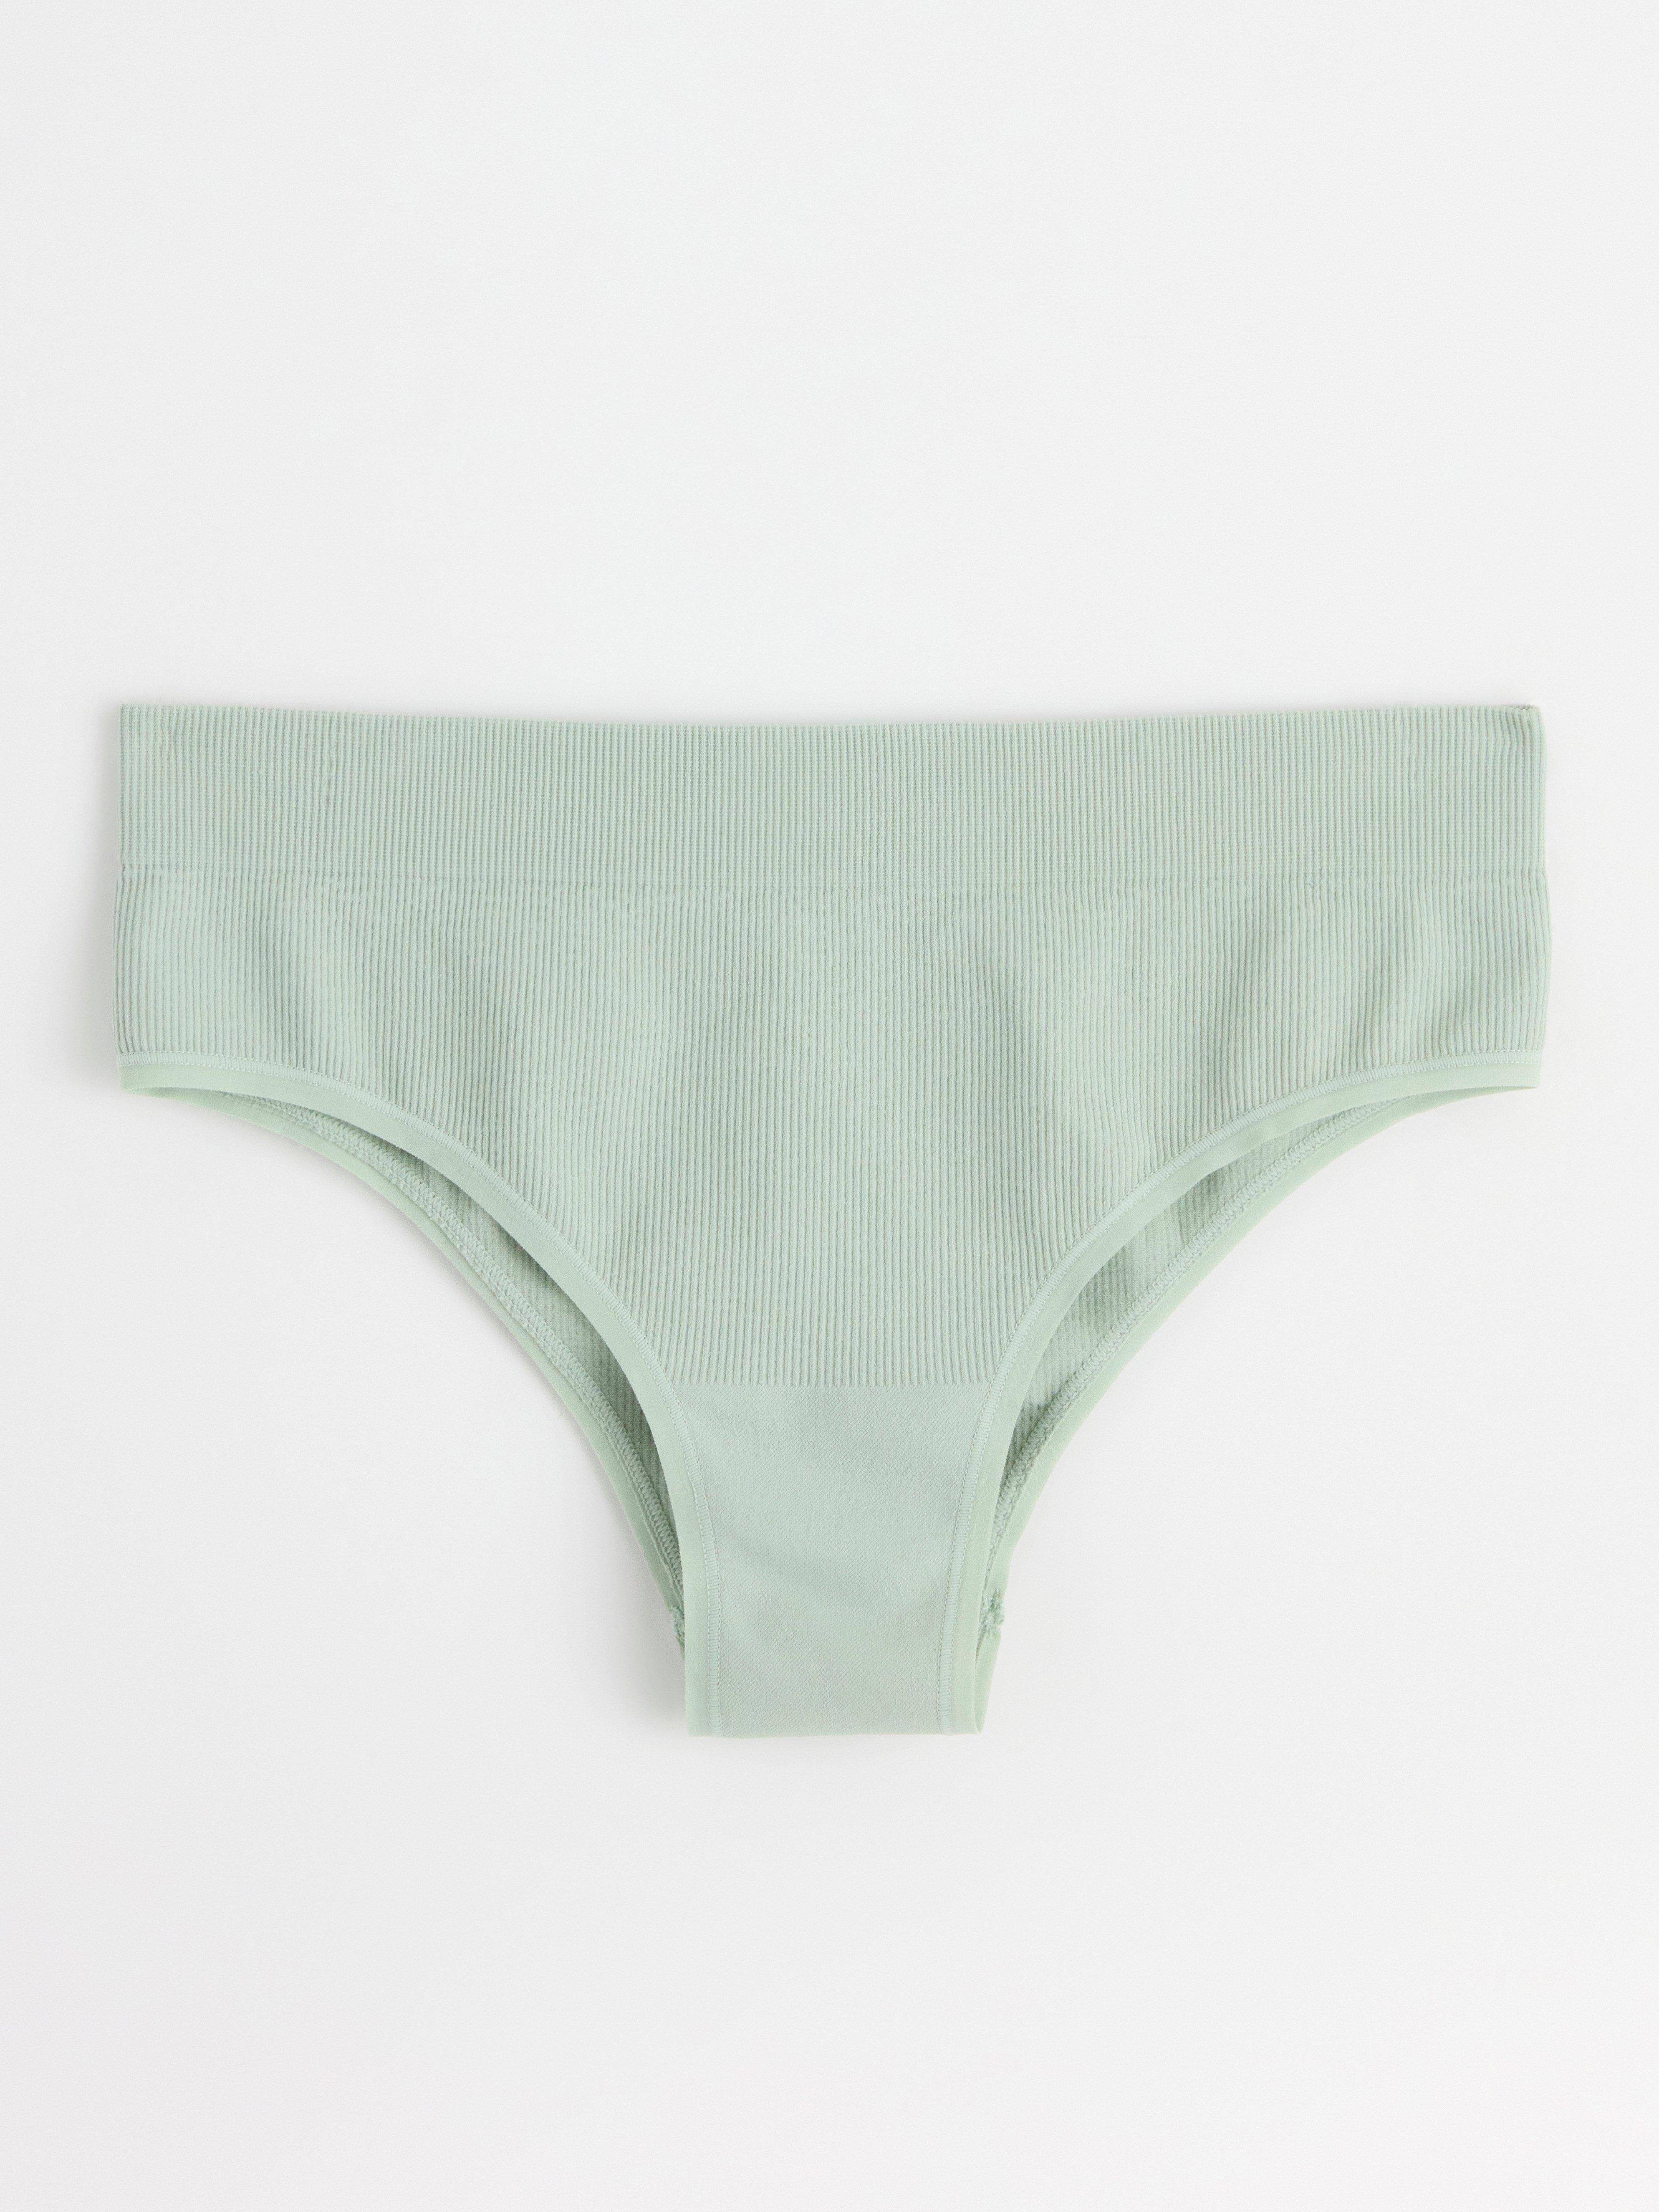 H&M 7 items: 5 Thongs, 2 Brazilian Seamless in Size M Lingerie/Underwear New